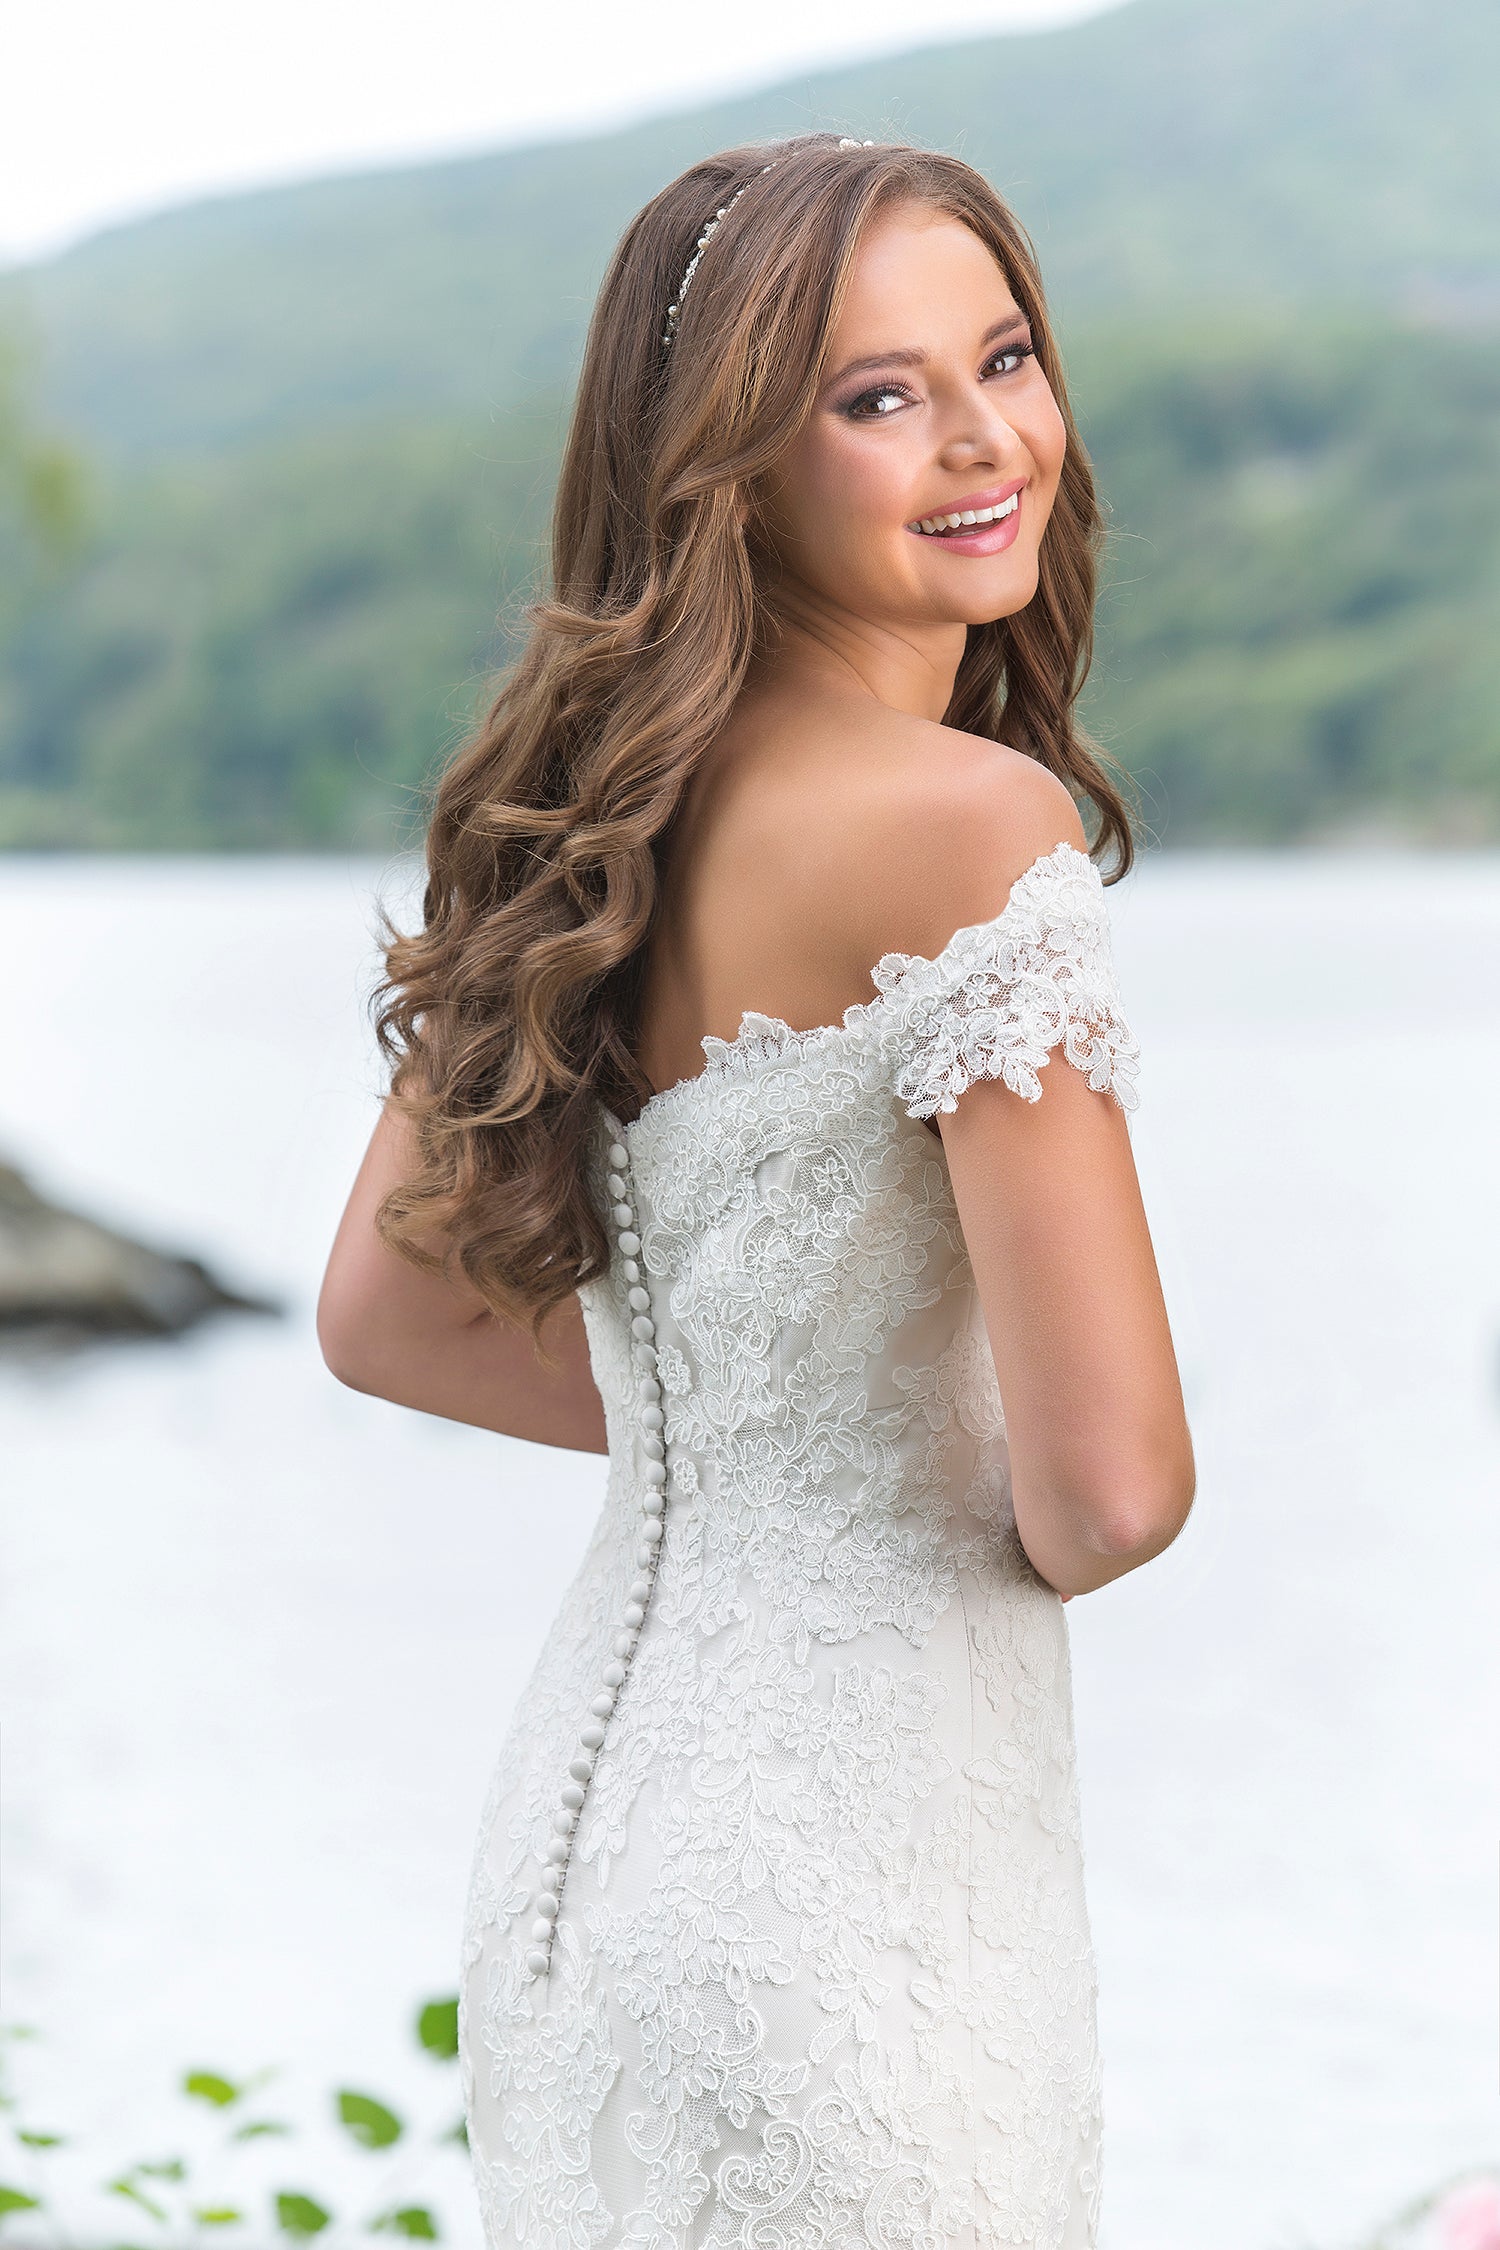 *NEW* Sweetheart Designer Wedding Gown - #6155